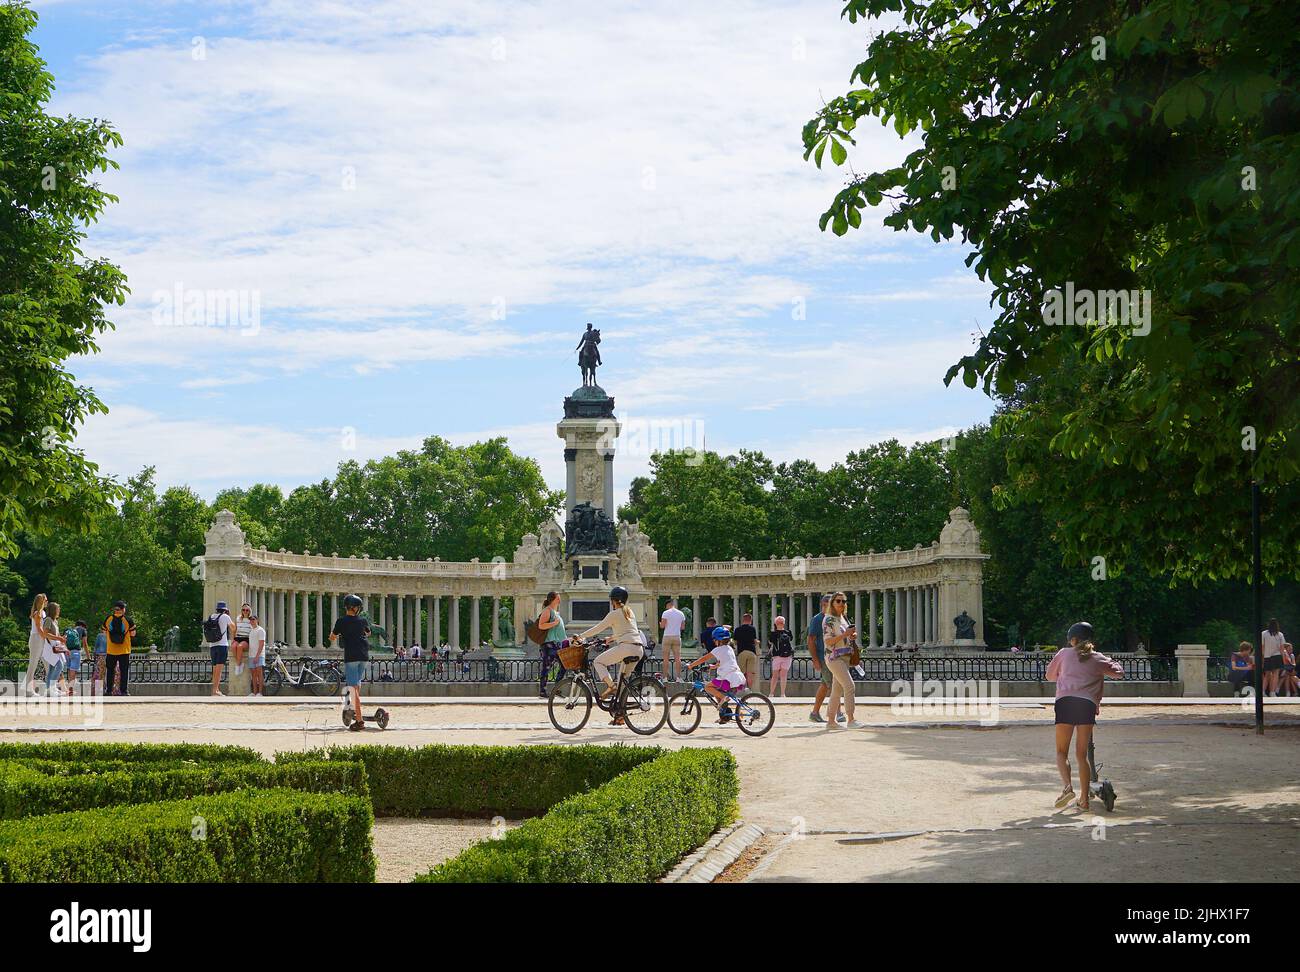 The Buen Retiro Park,Parque del Buen Retiro in Madrid, Spain.El Retiro first belonged to the Spanish Monarchy.Late 19th century it became a public park. Stock Photo